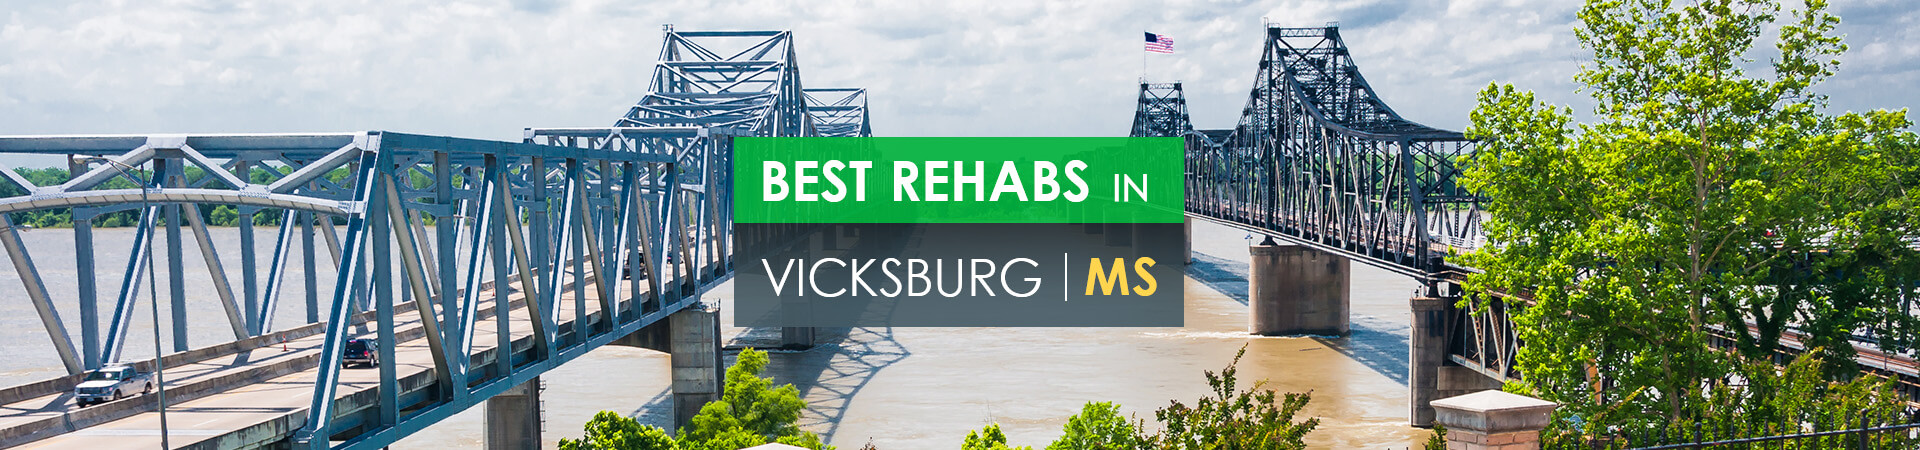 Best rehabs in Vicksburg, MS